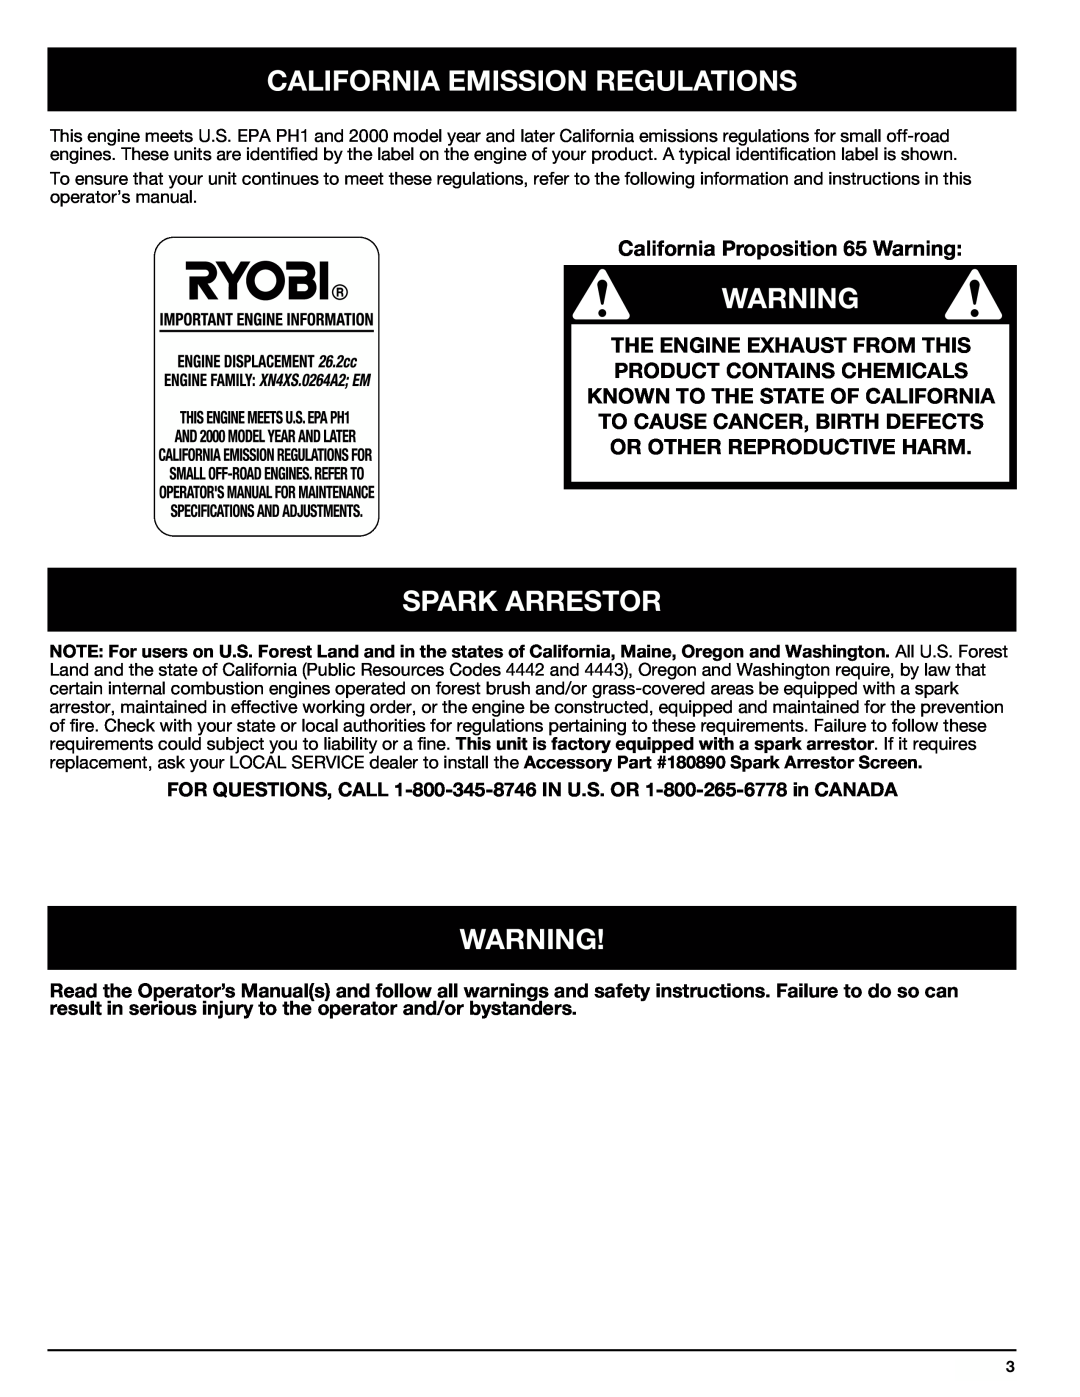 Ryobi Outdoor 875r manual California Emission Regulations, Spark Arrestor, California Proposition 65 Warning 